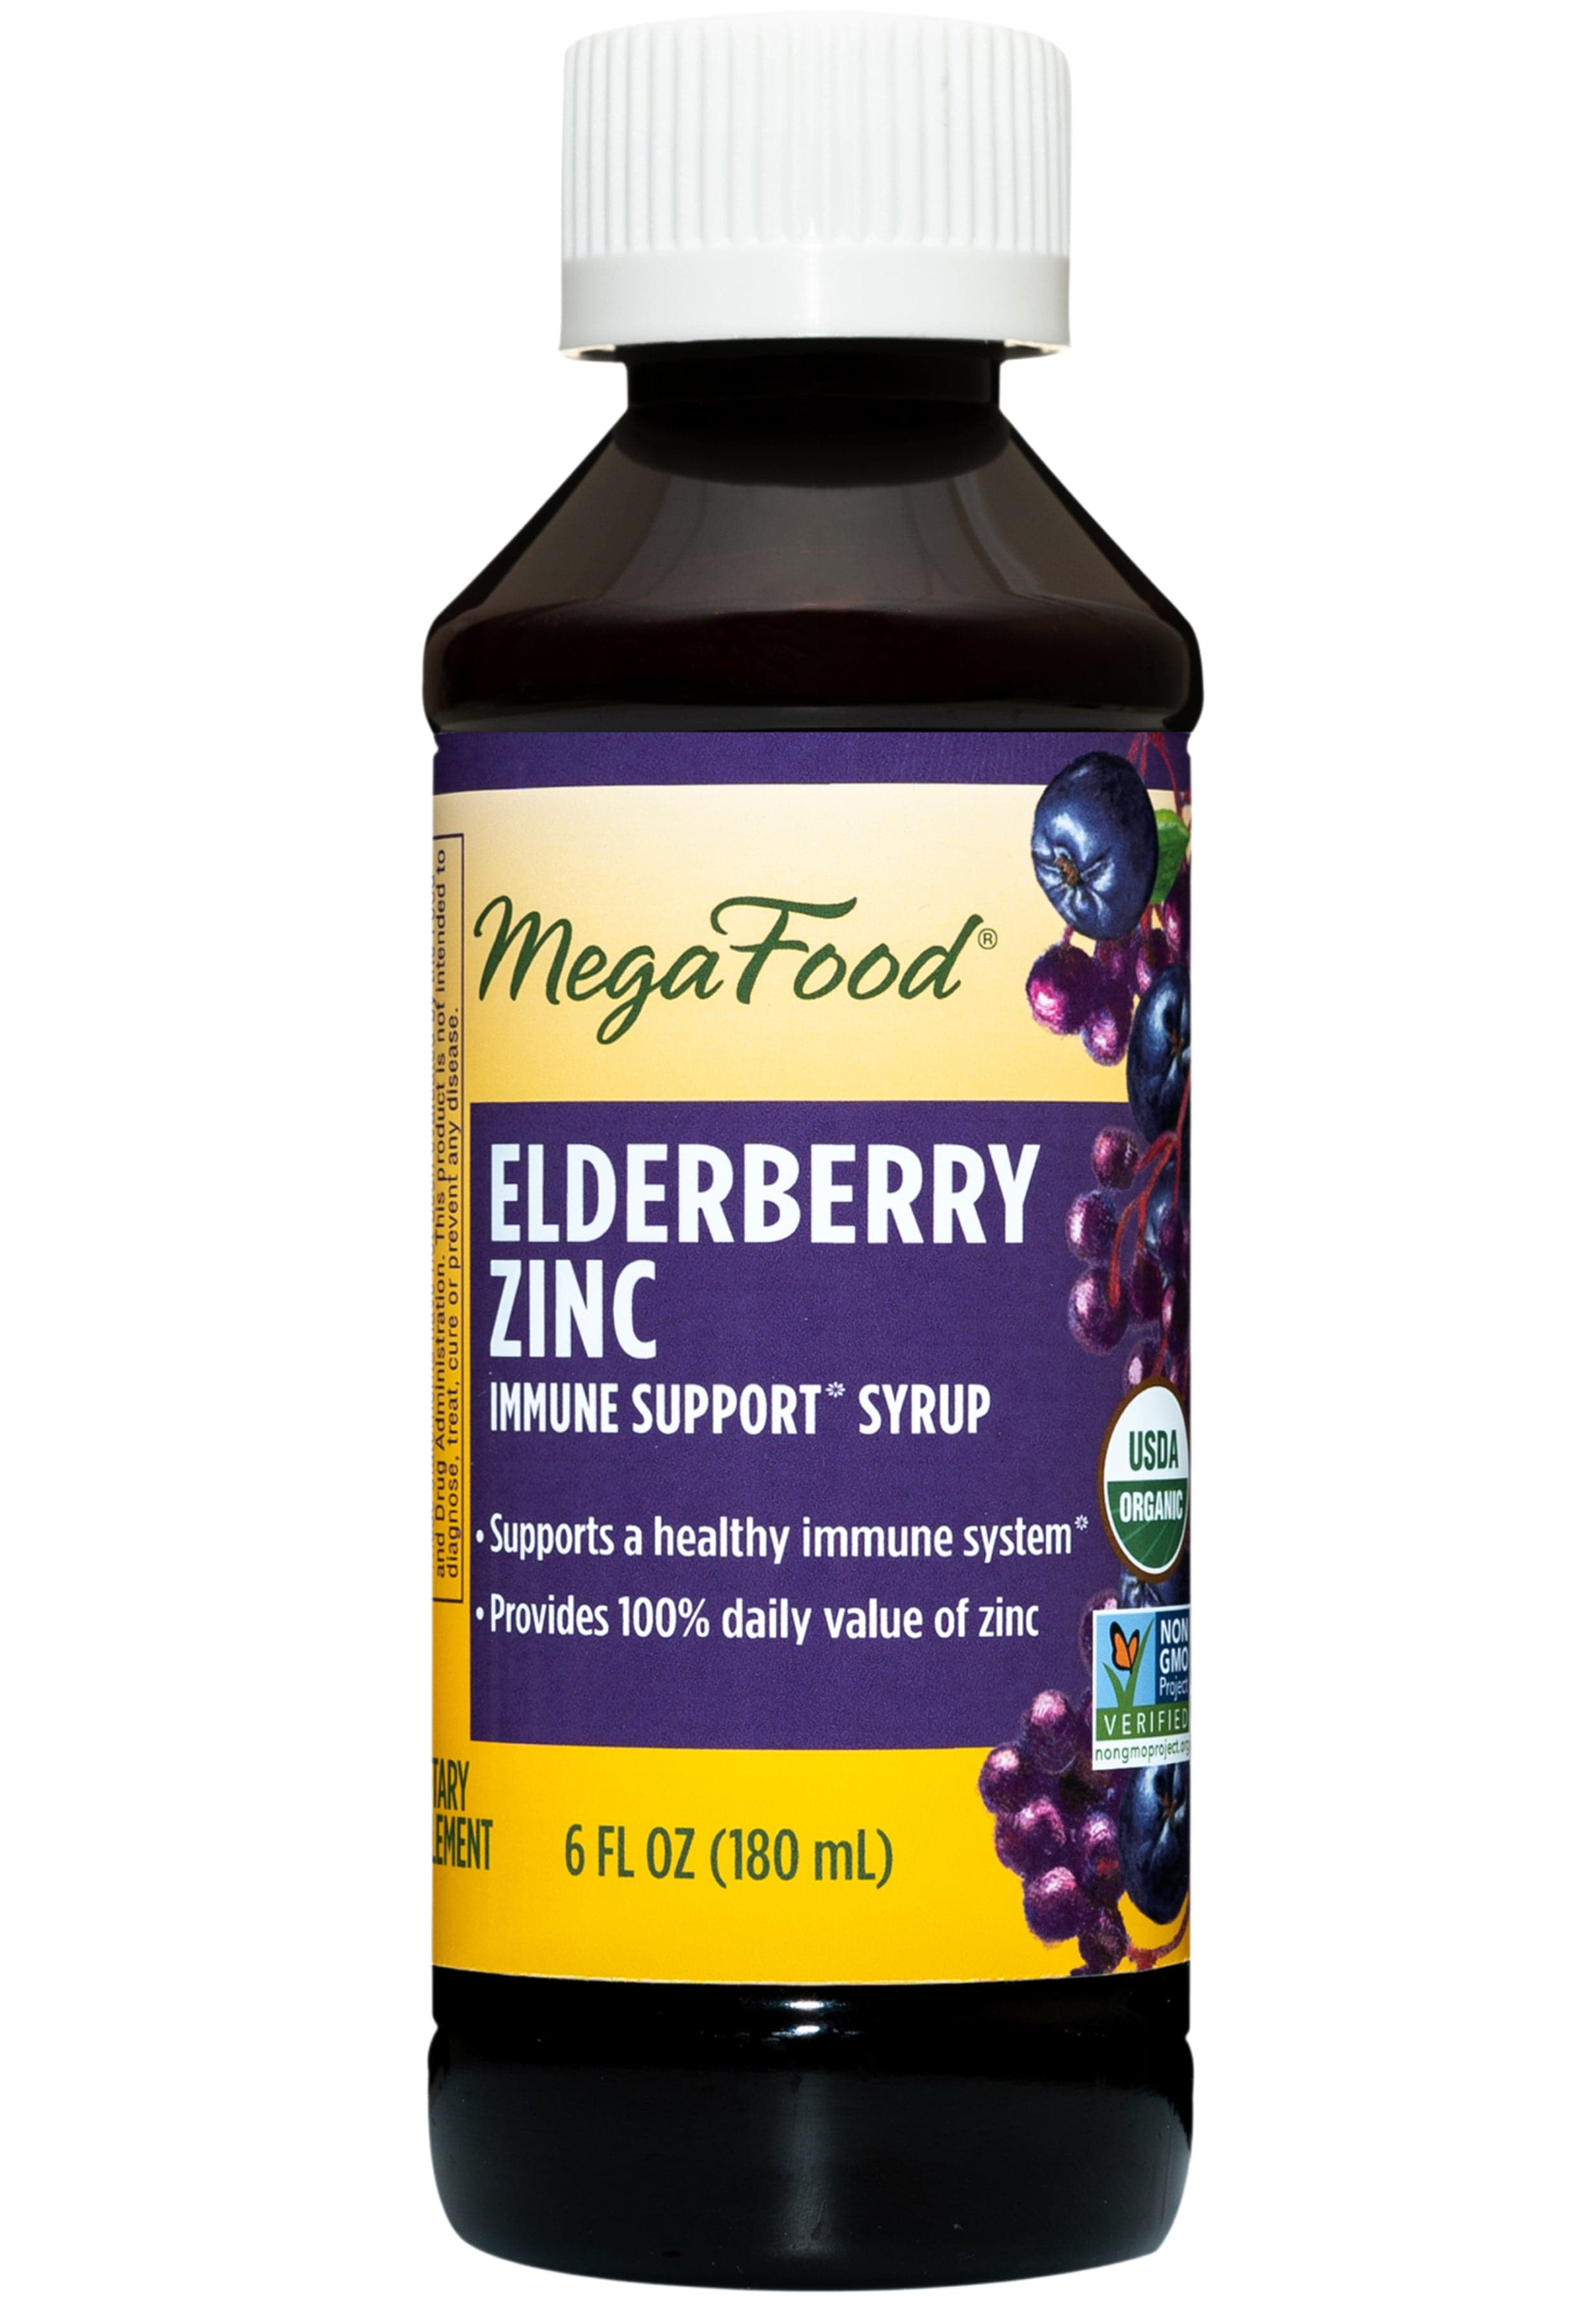 MegaFood Elderberry Zinc Immune Support Syrup